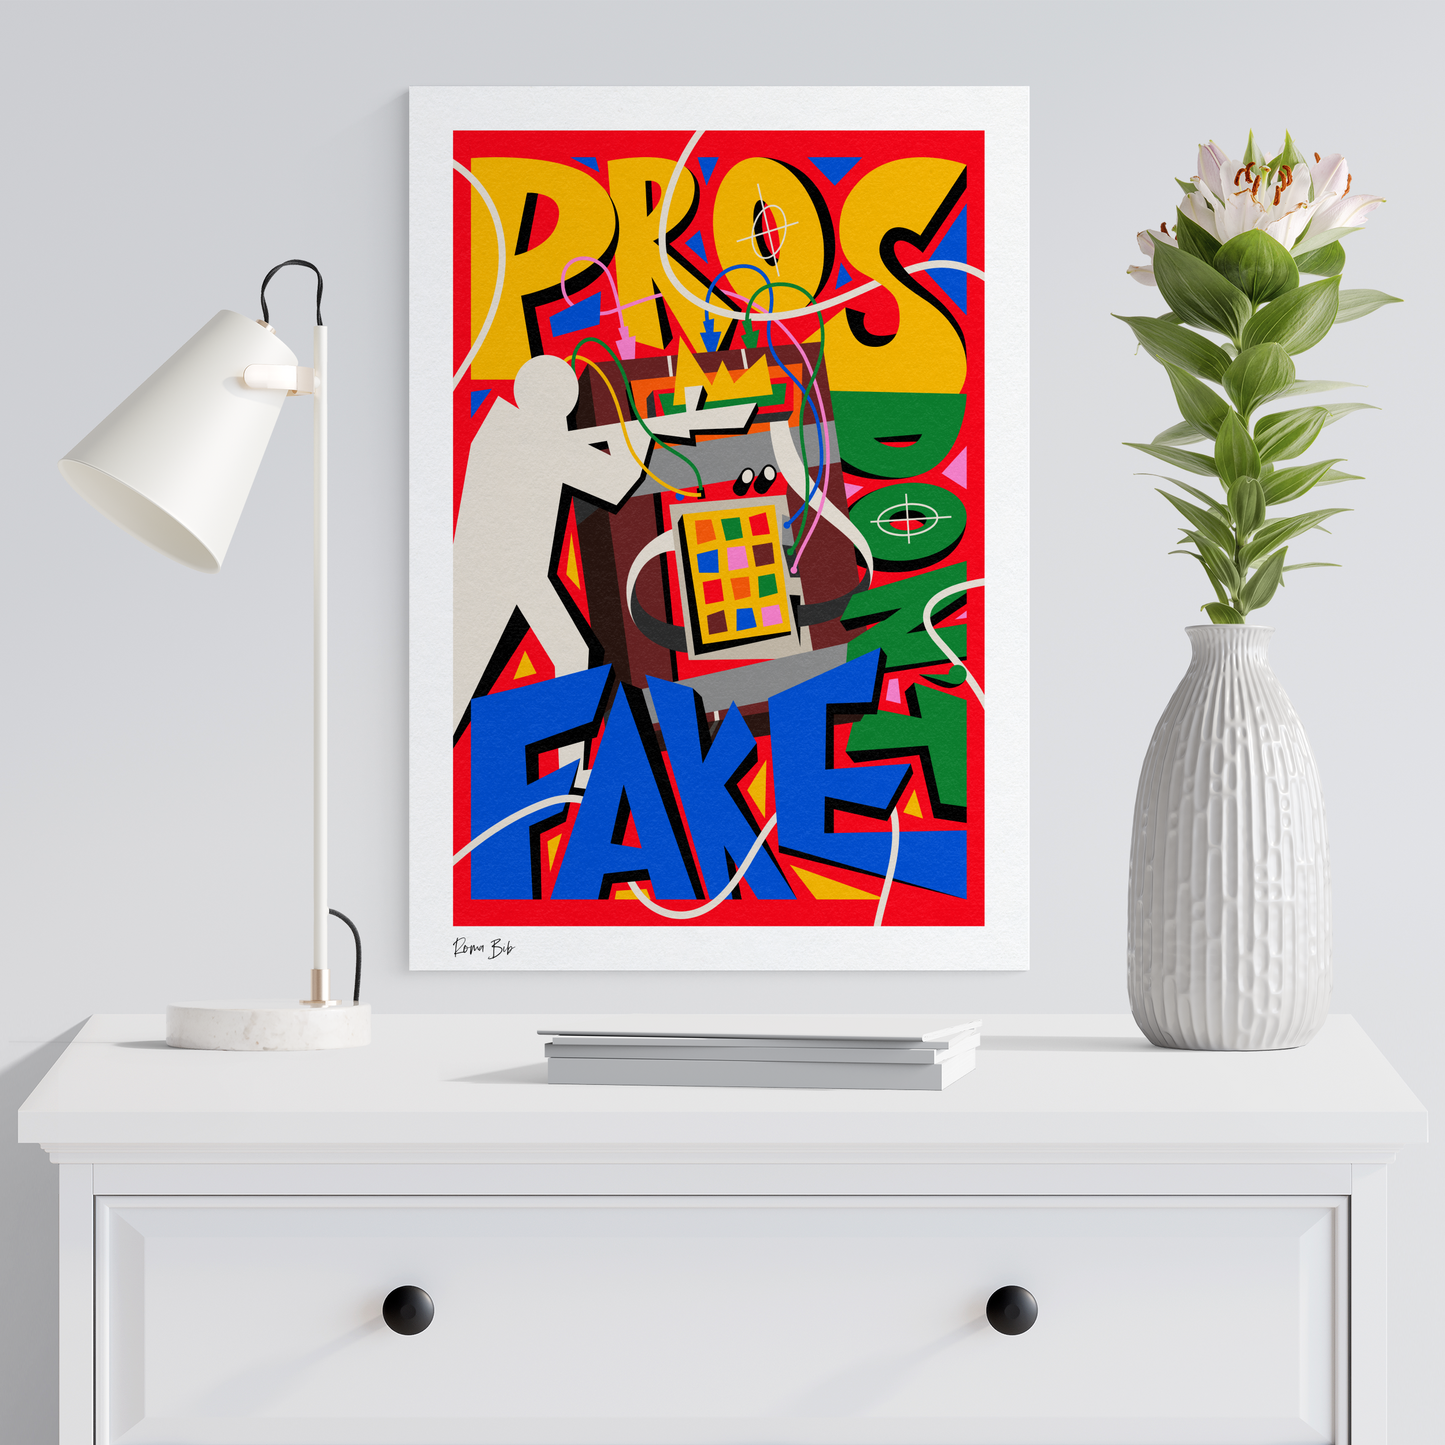 Counter Cubes: Pro's Don't Fake Fine Art Print